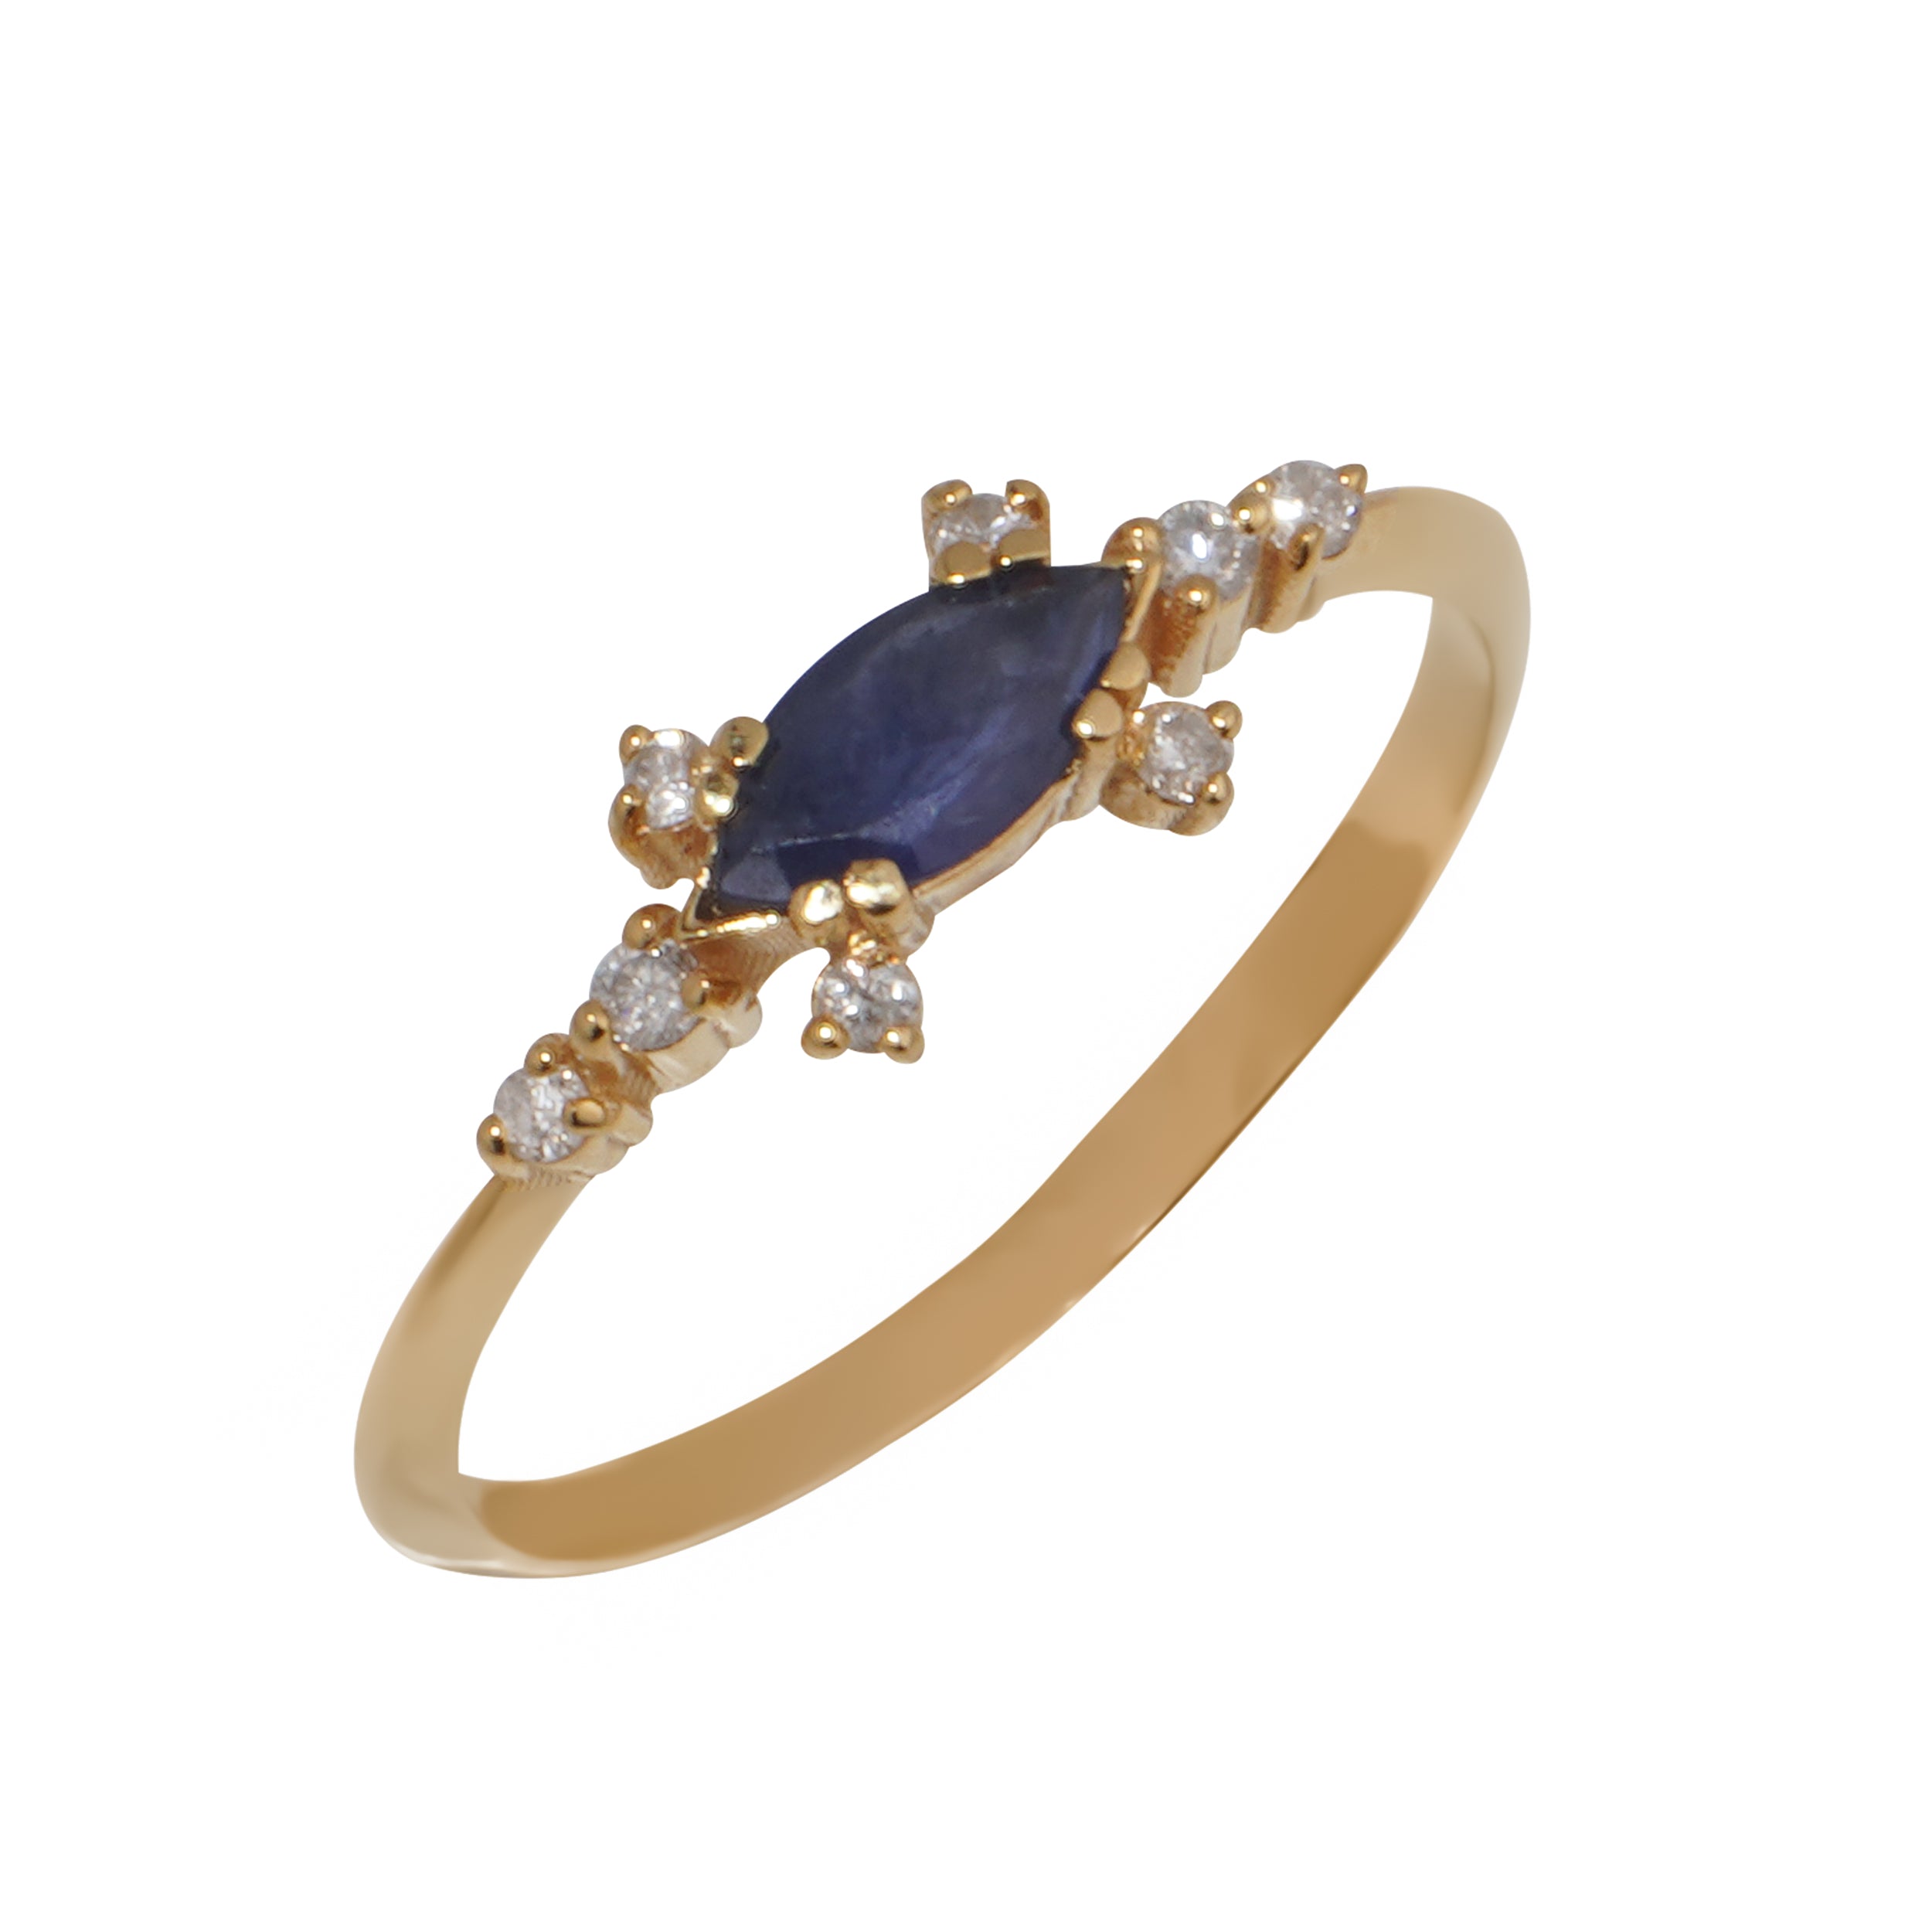 Night sky blue sapphire ring